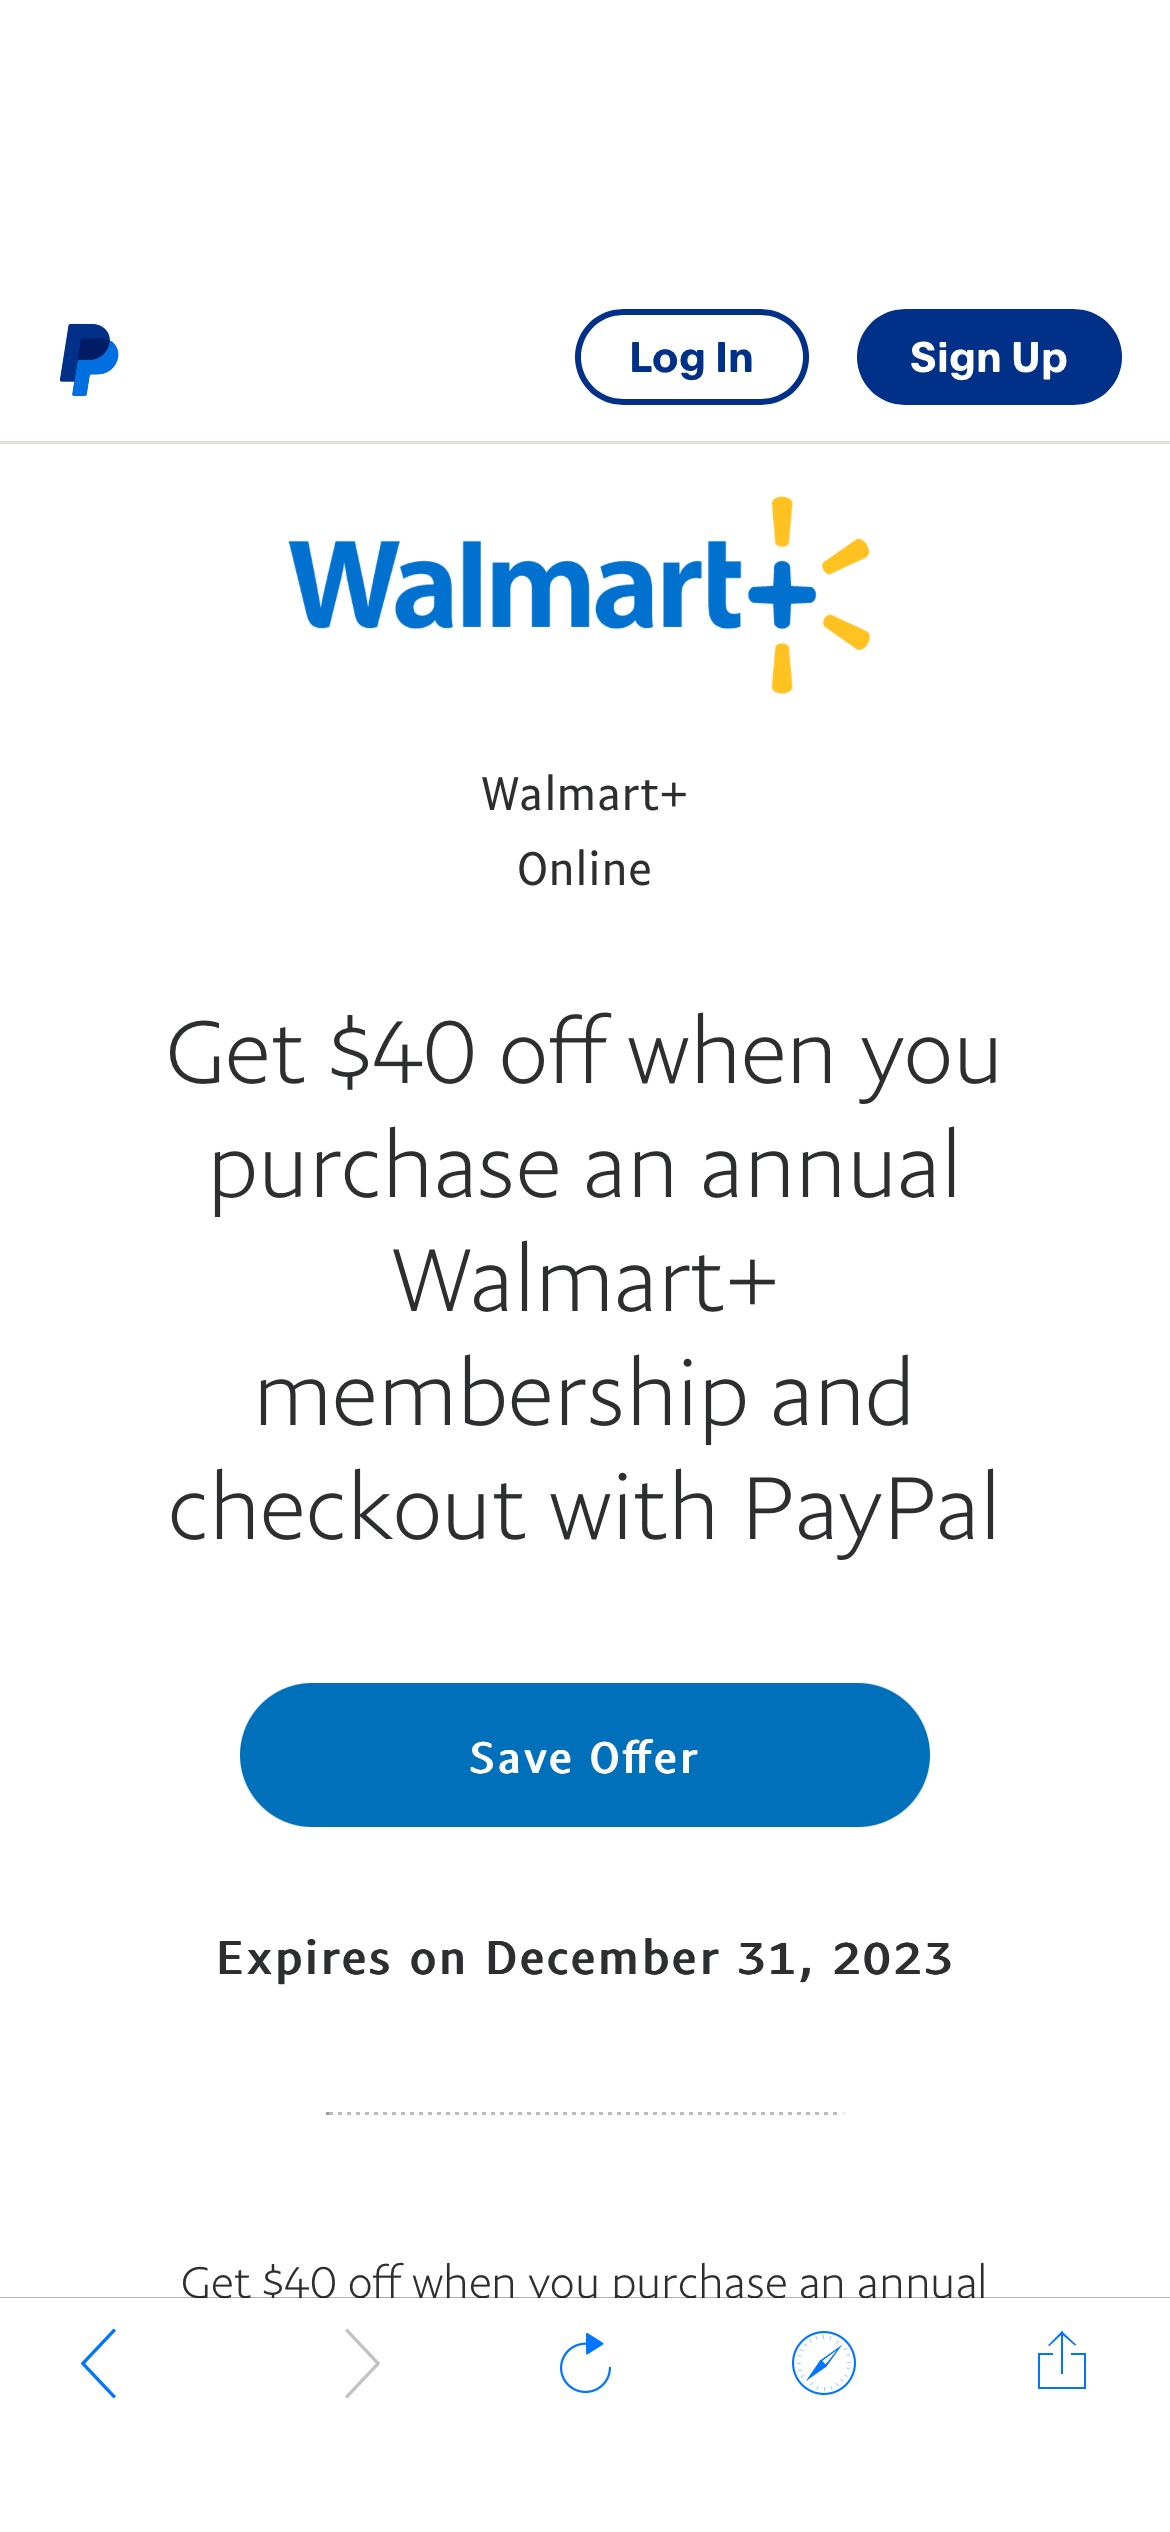 Walmart+ membership with PayPal 优惠折扣活动